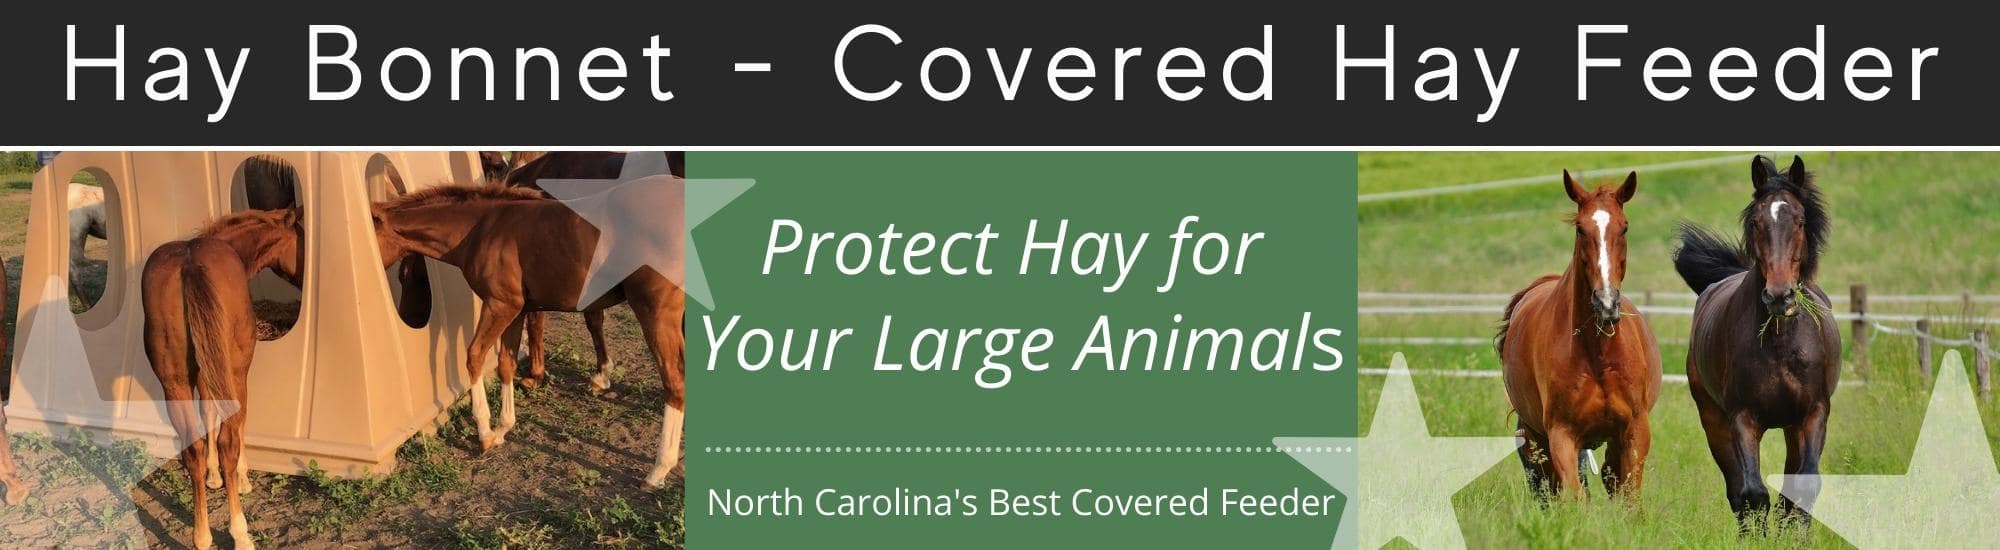 Covered Hay Feeder - Pittsboro, NC - Hay Bonnet